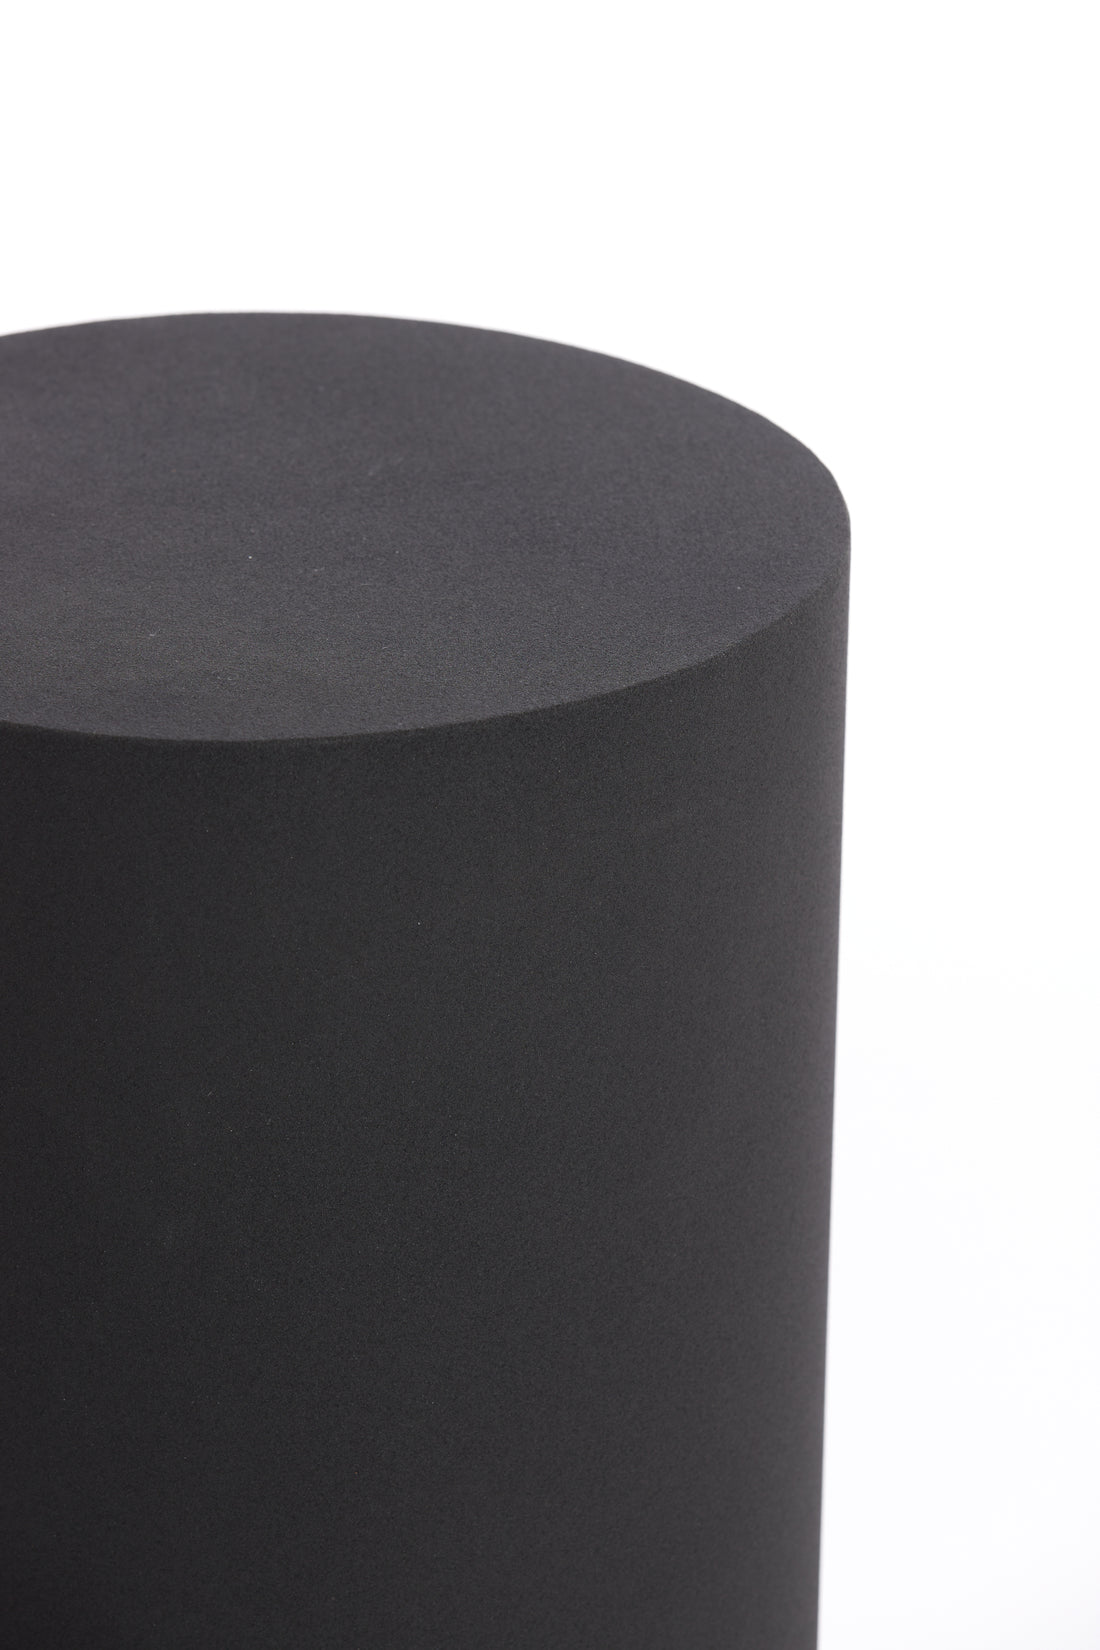 Column ALARIOS matt black Ø30x80cm